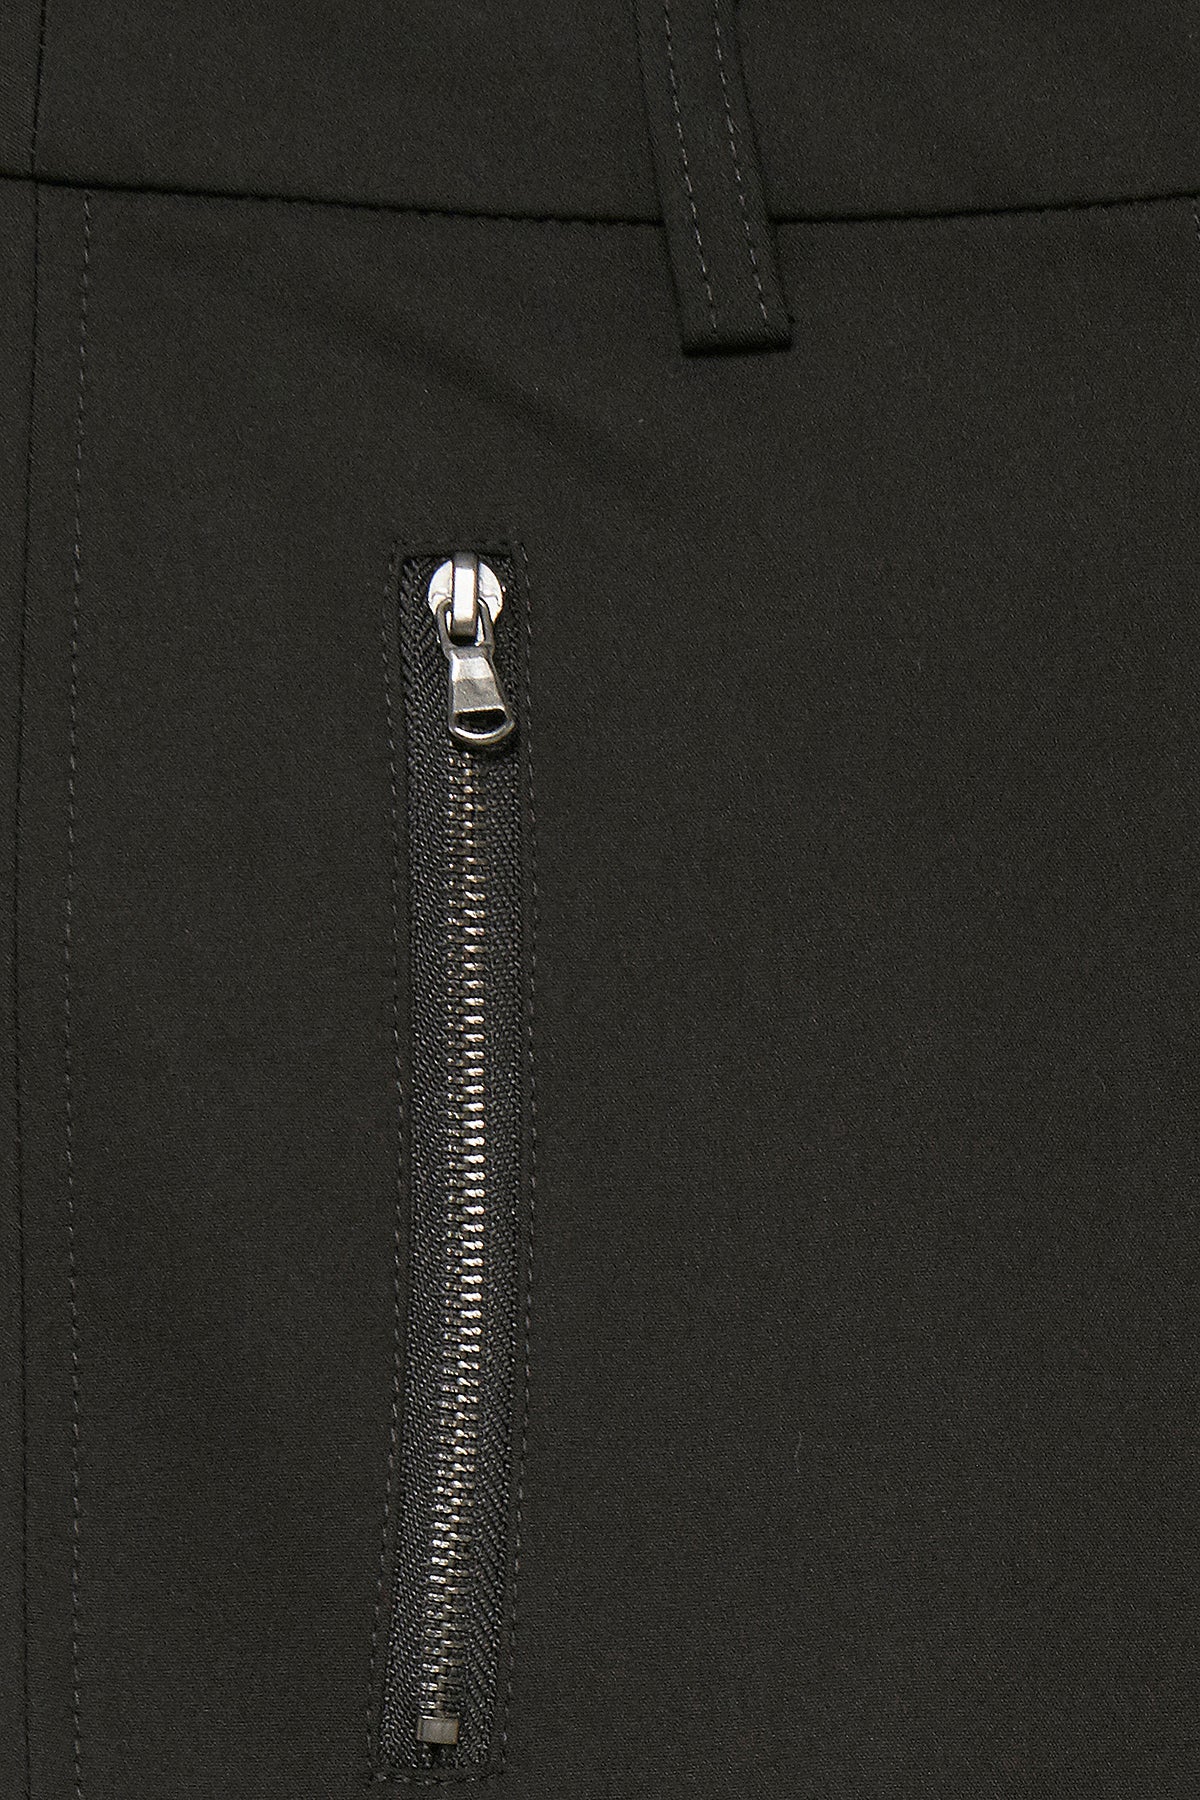 Fransa Zapant Black Cigarette Style Trousers, 20603400 – Ruby 67 Boutique